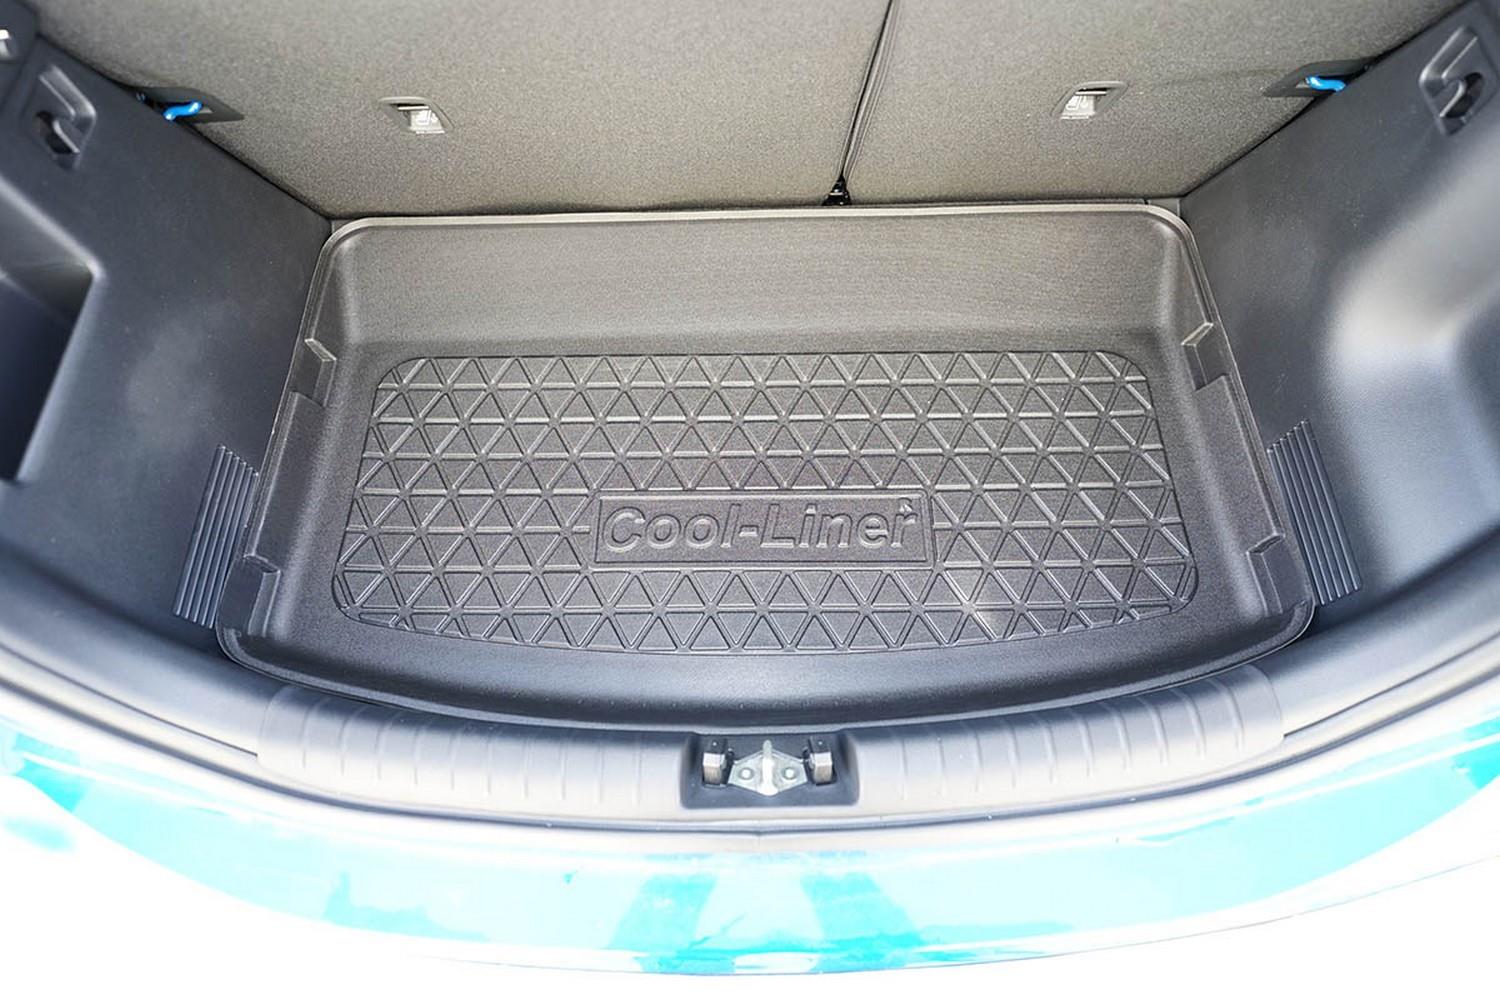 https://www.carparts-expert.com/images/stories/virtuemart/product/kia7ritm-kia-rio-yb-2020-5-door-hatchback-cool-liner-anti-slip-pe-tpe-rubber-1.jpg